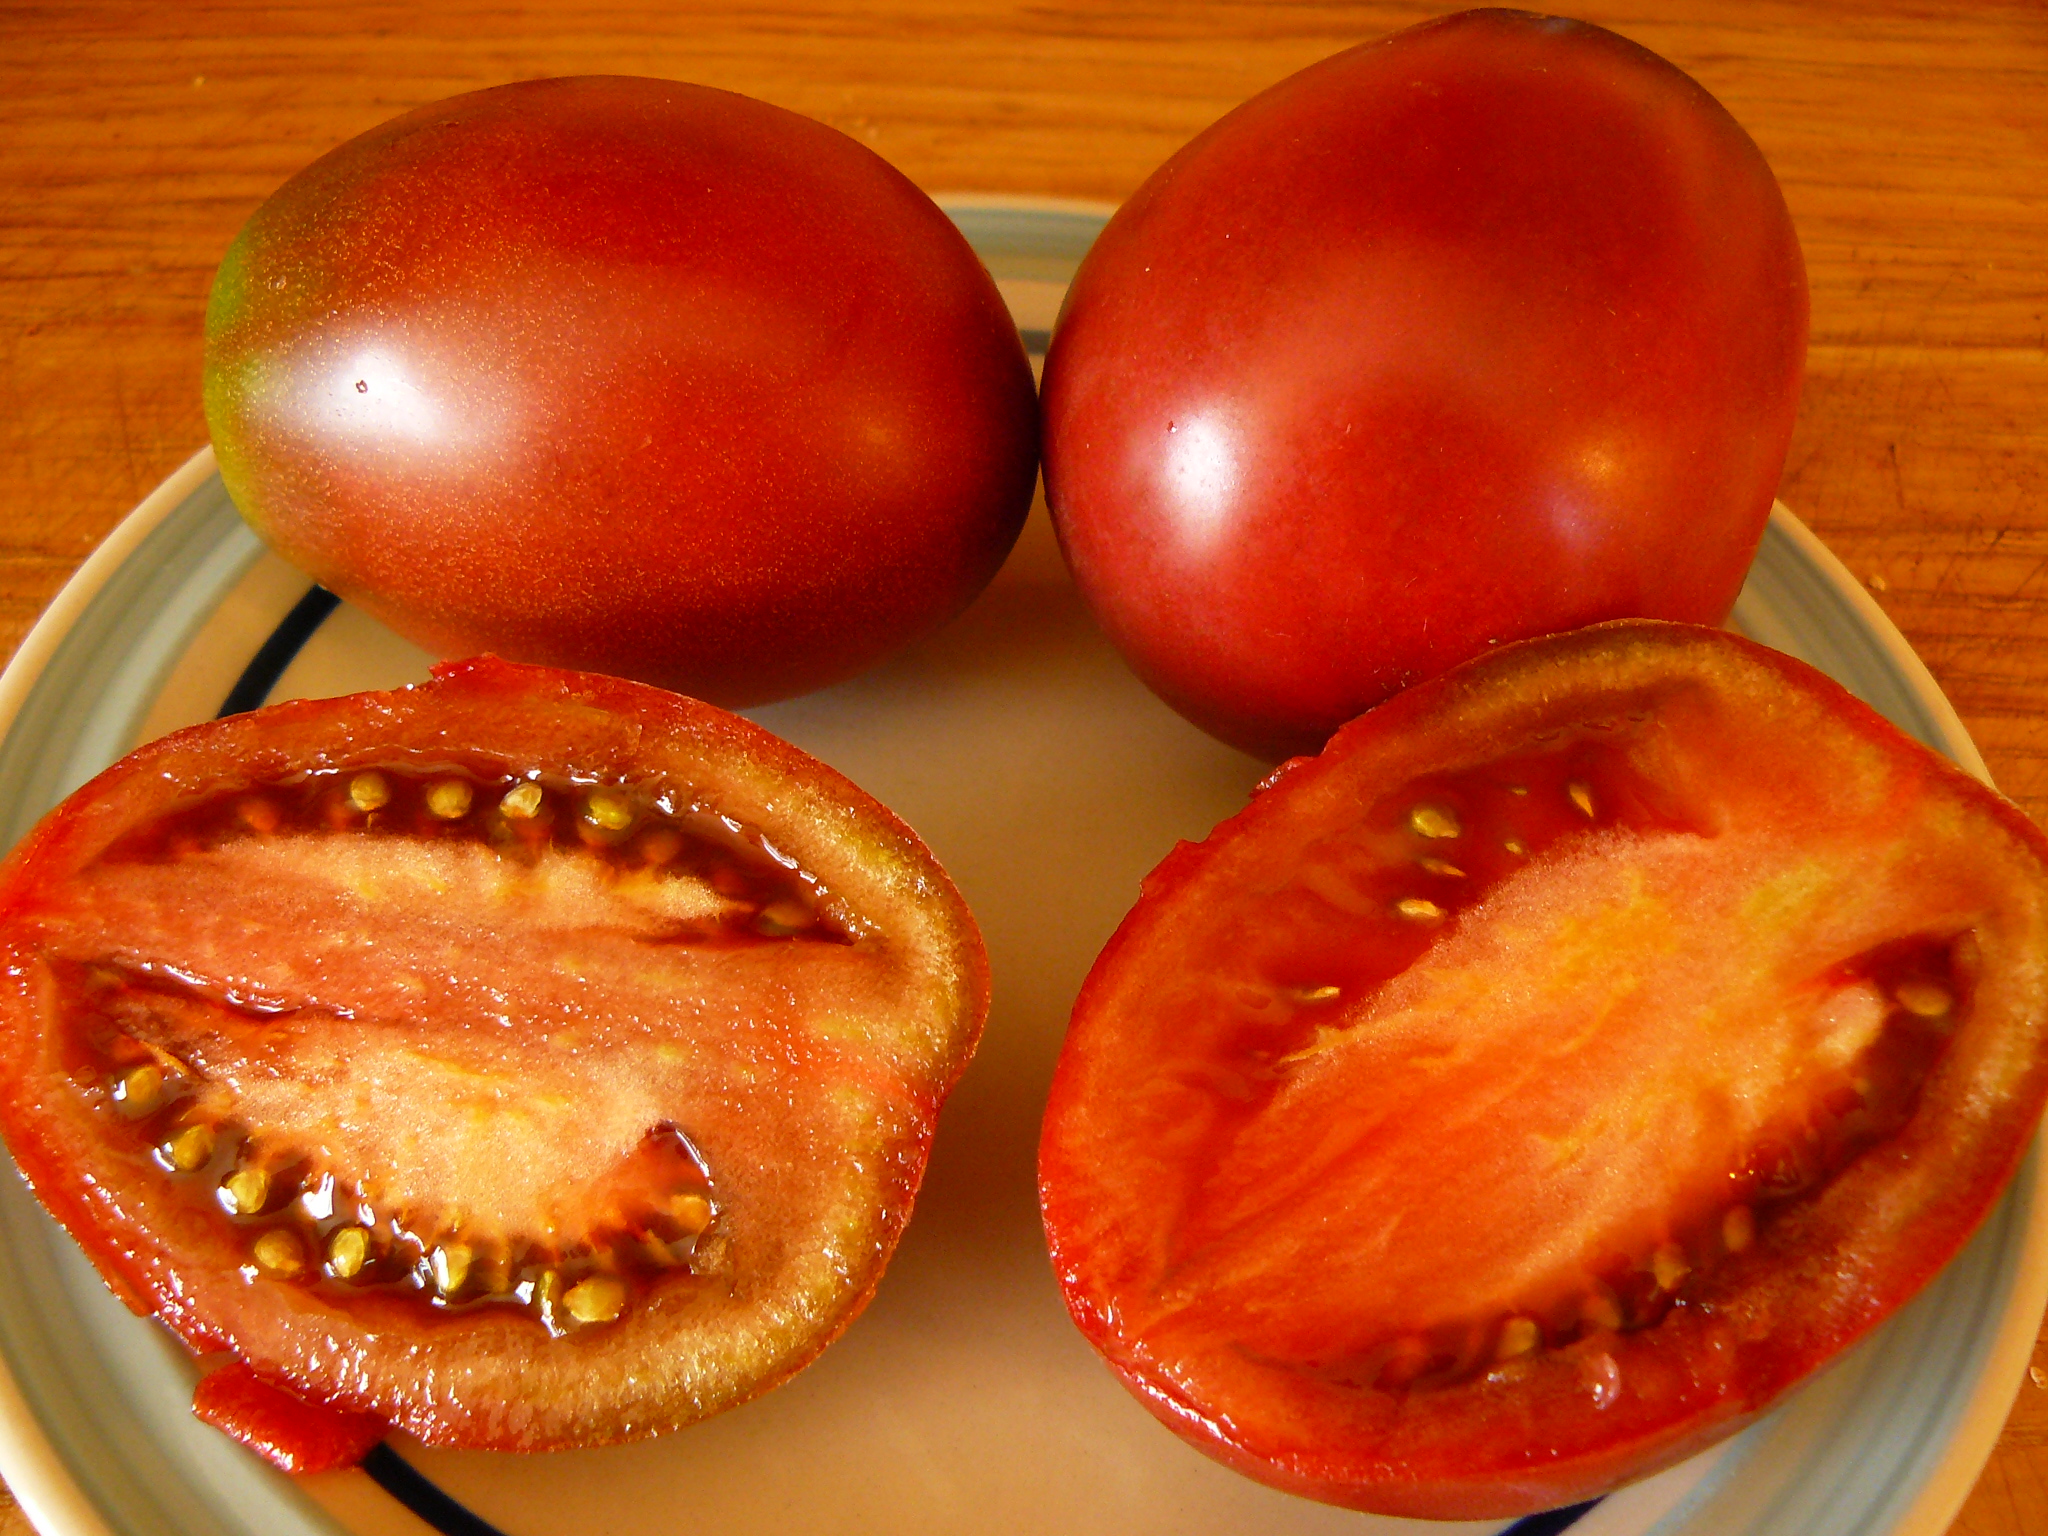 Costoluto Genovese Indeterminate Tomato Seeds